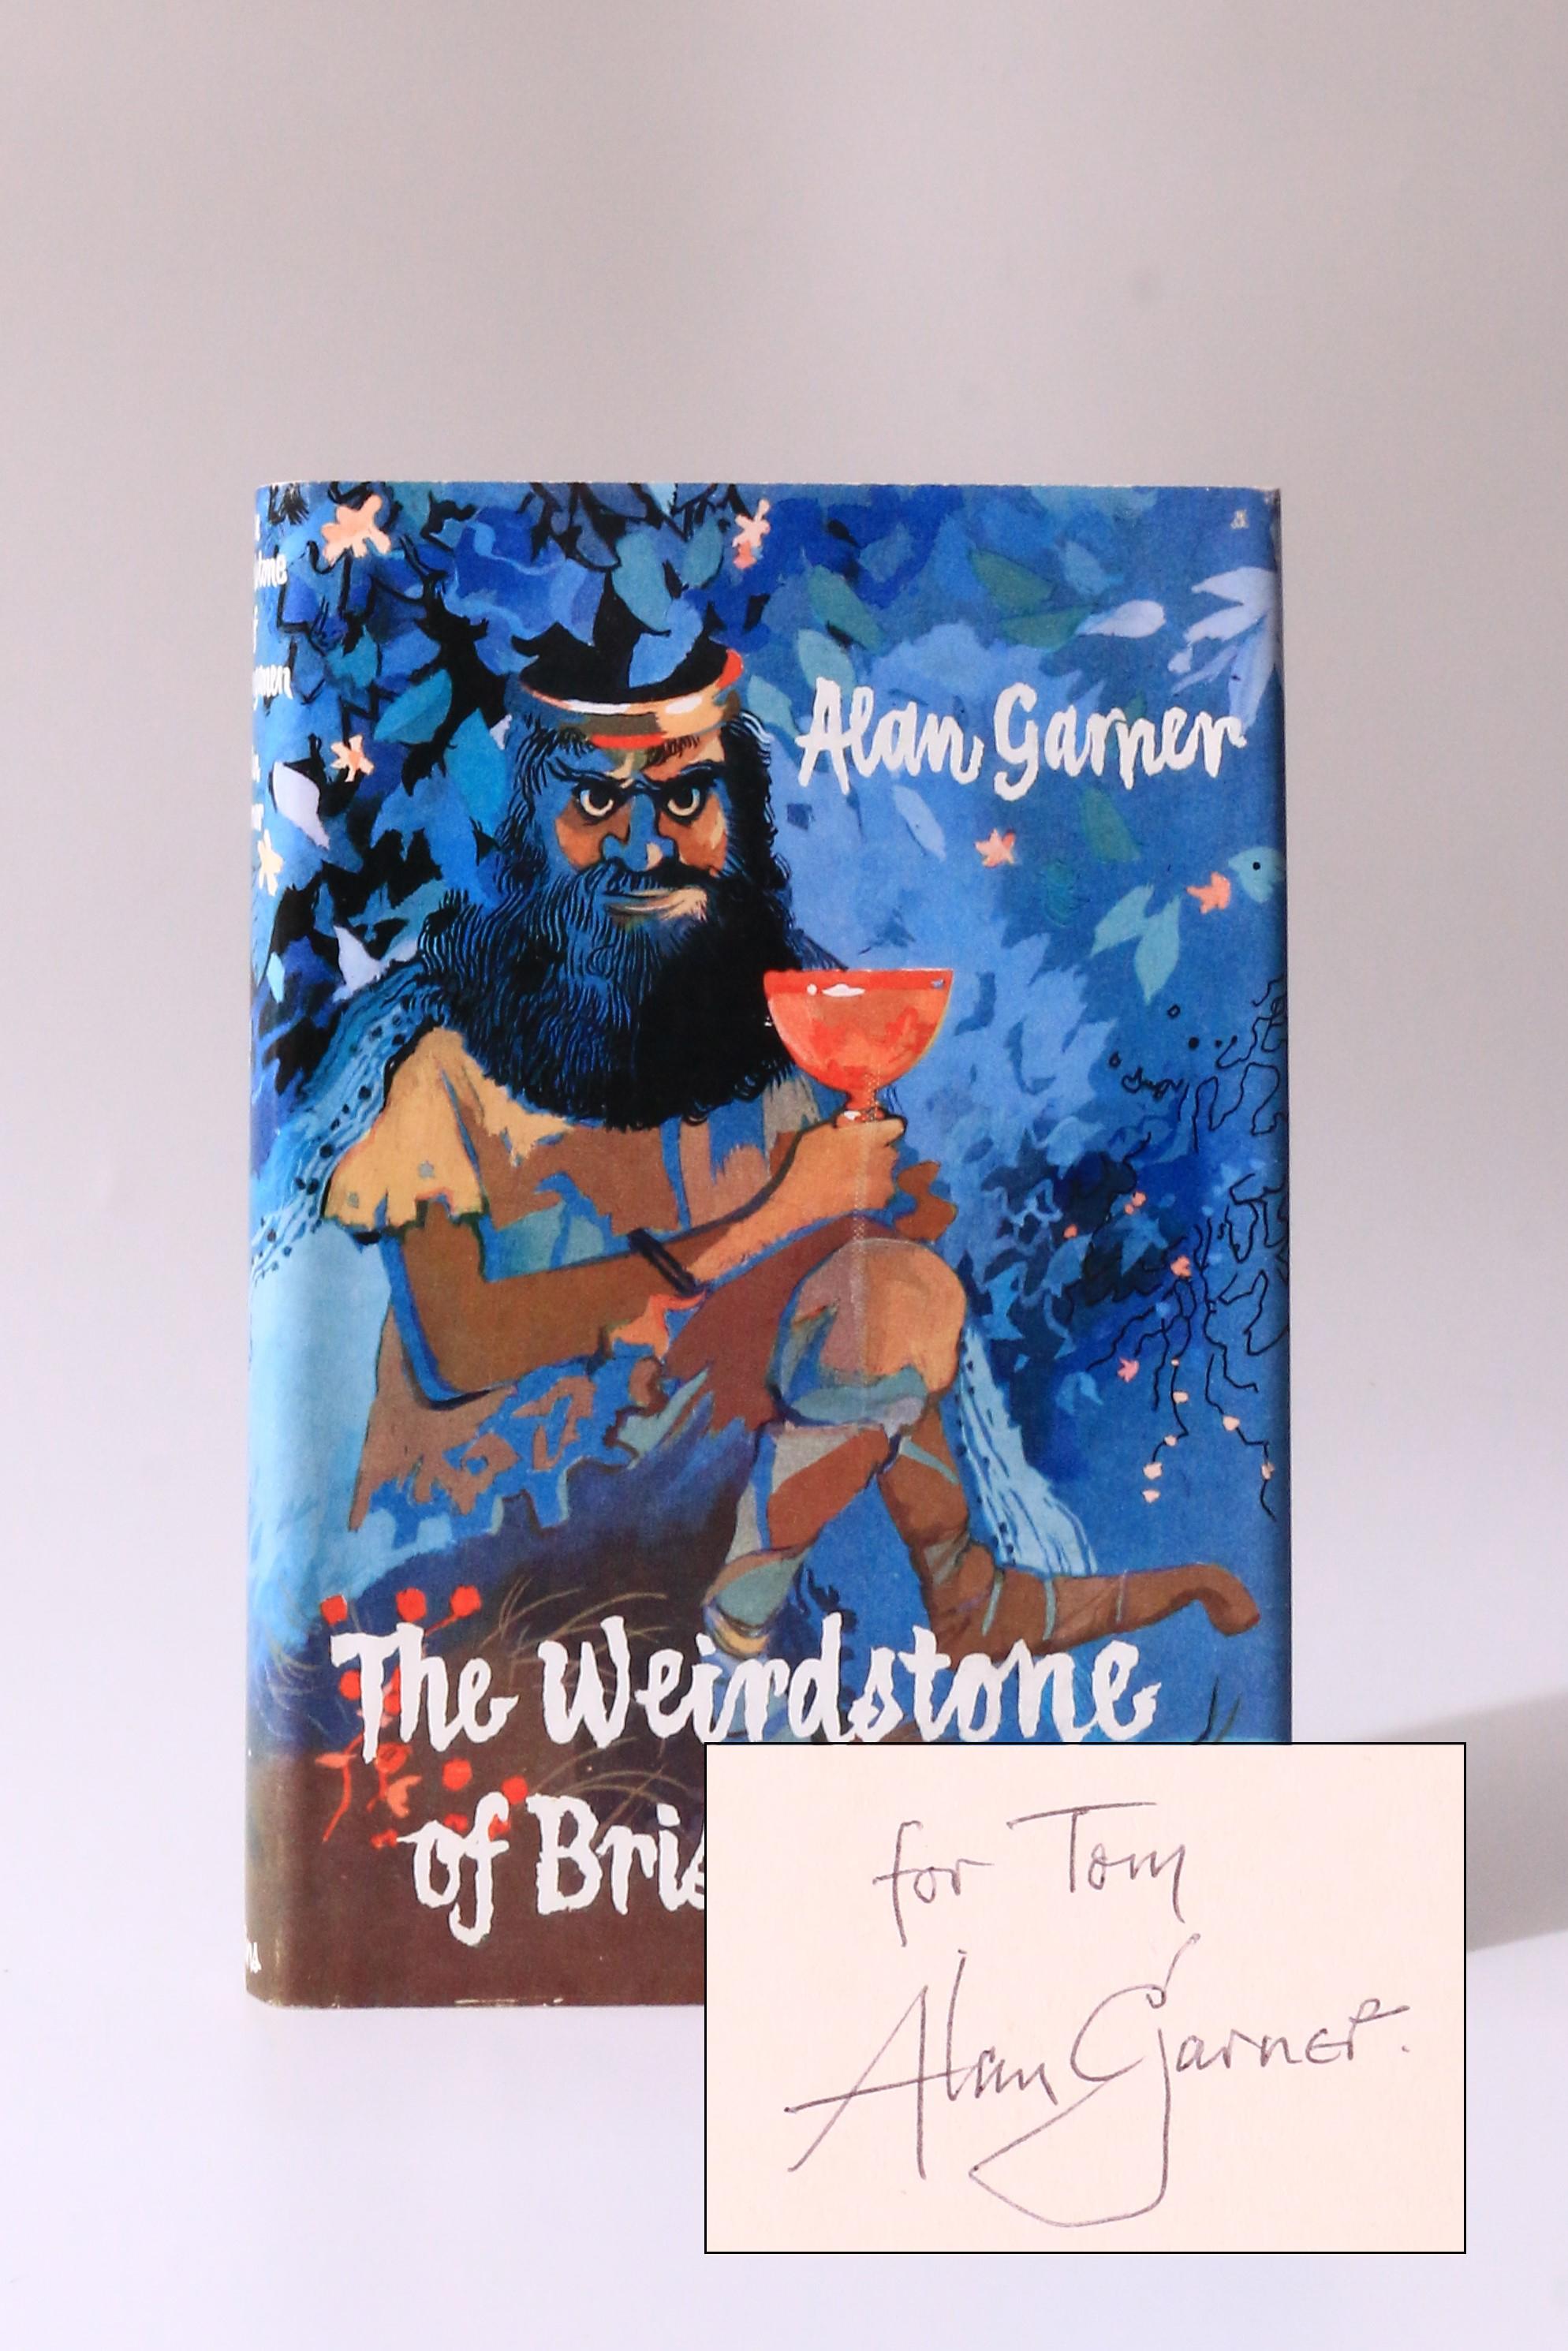 Alan Garner - The Weirdstone of Brisingamen - Collins, 1960, Signed First Edition.